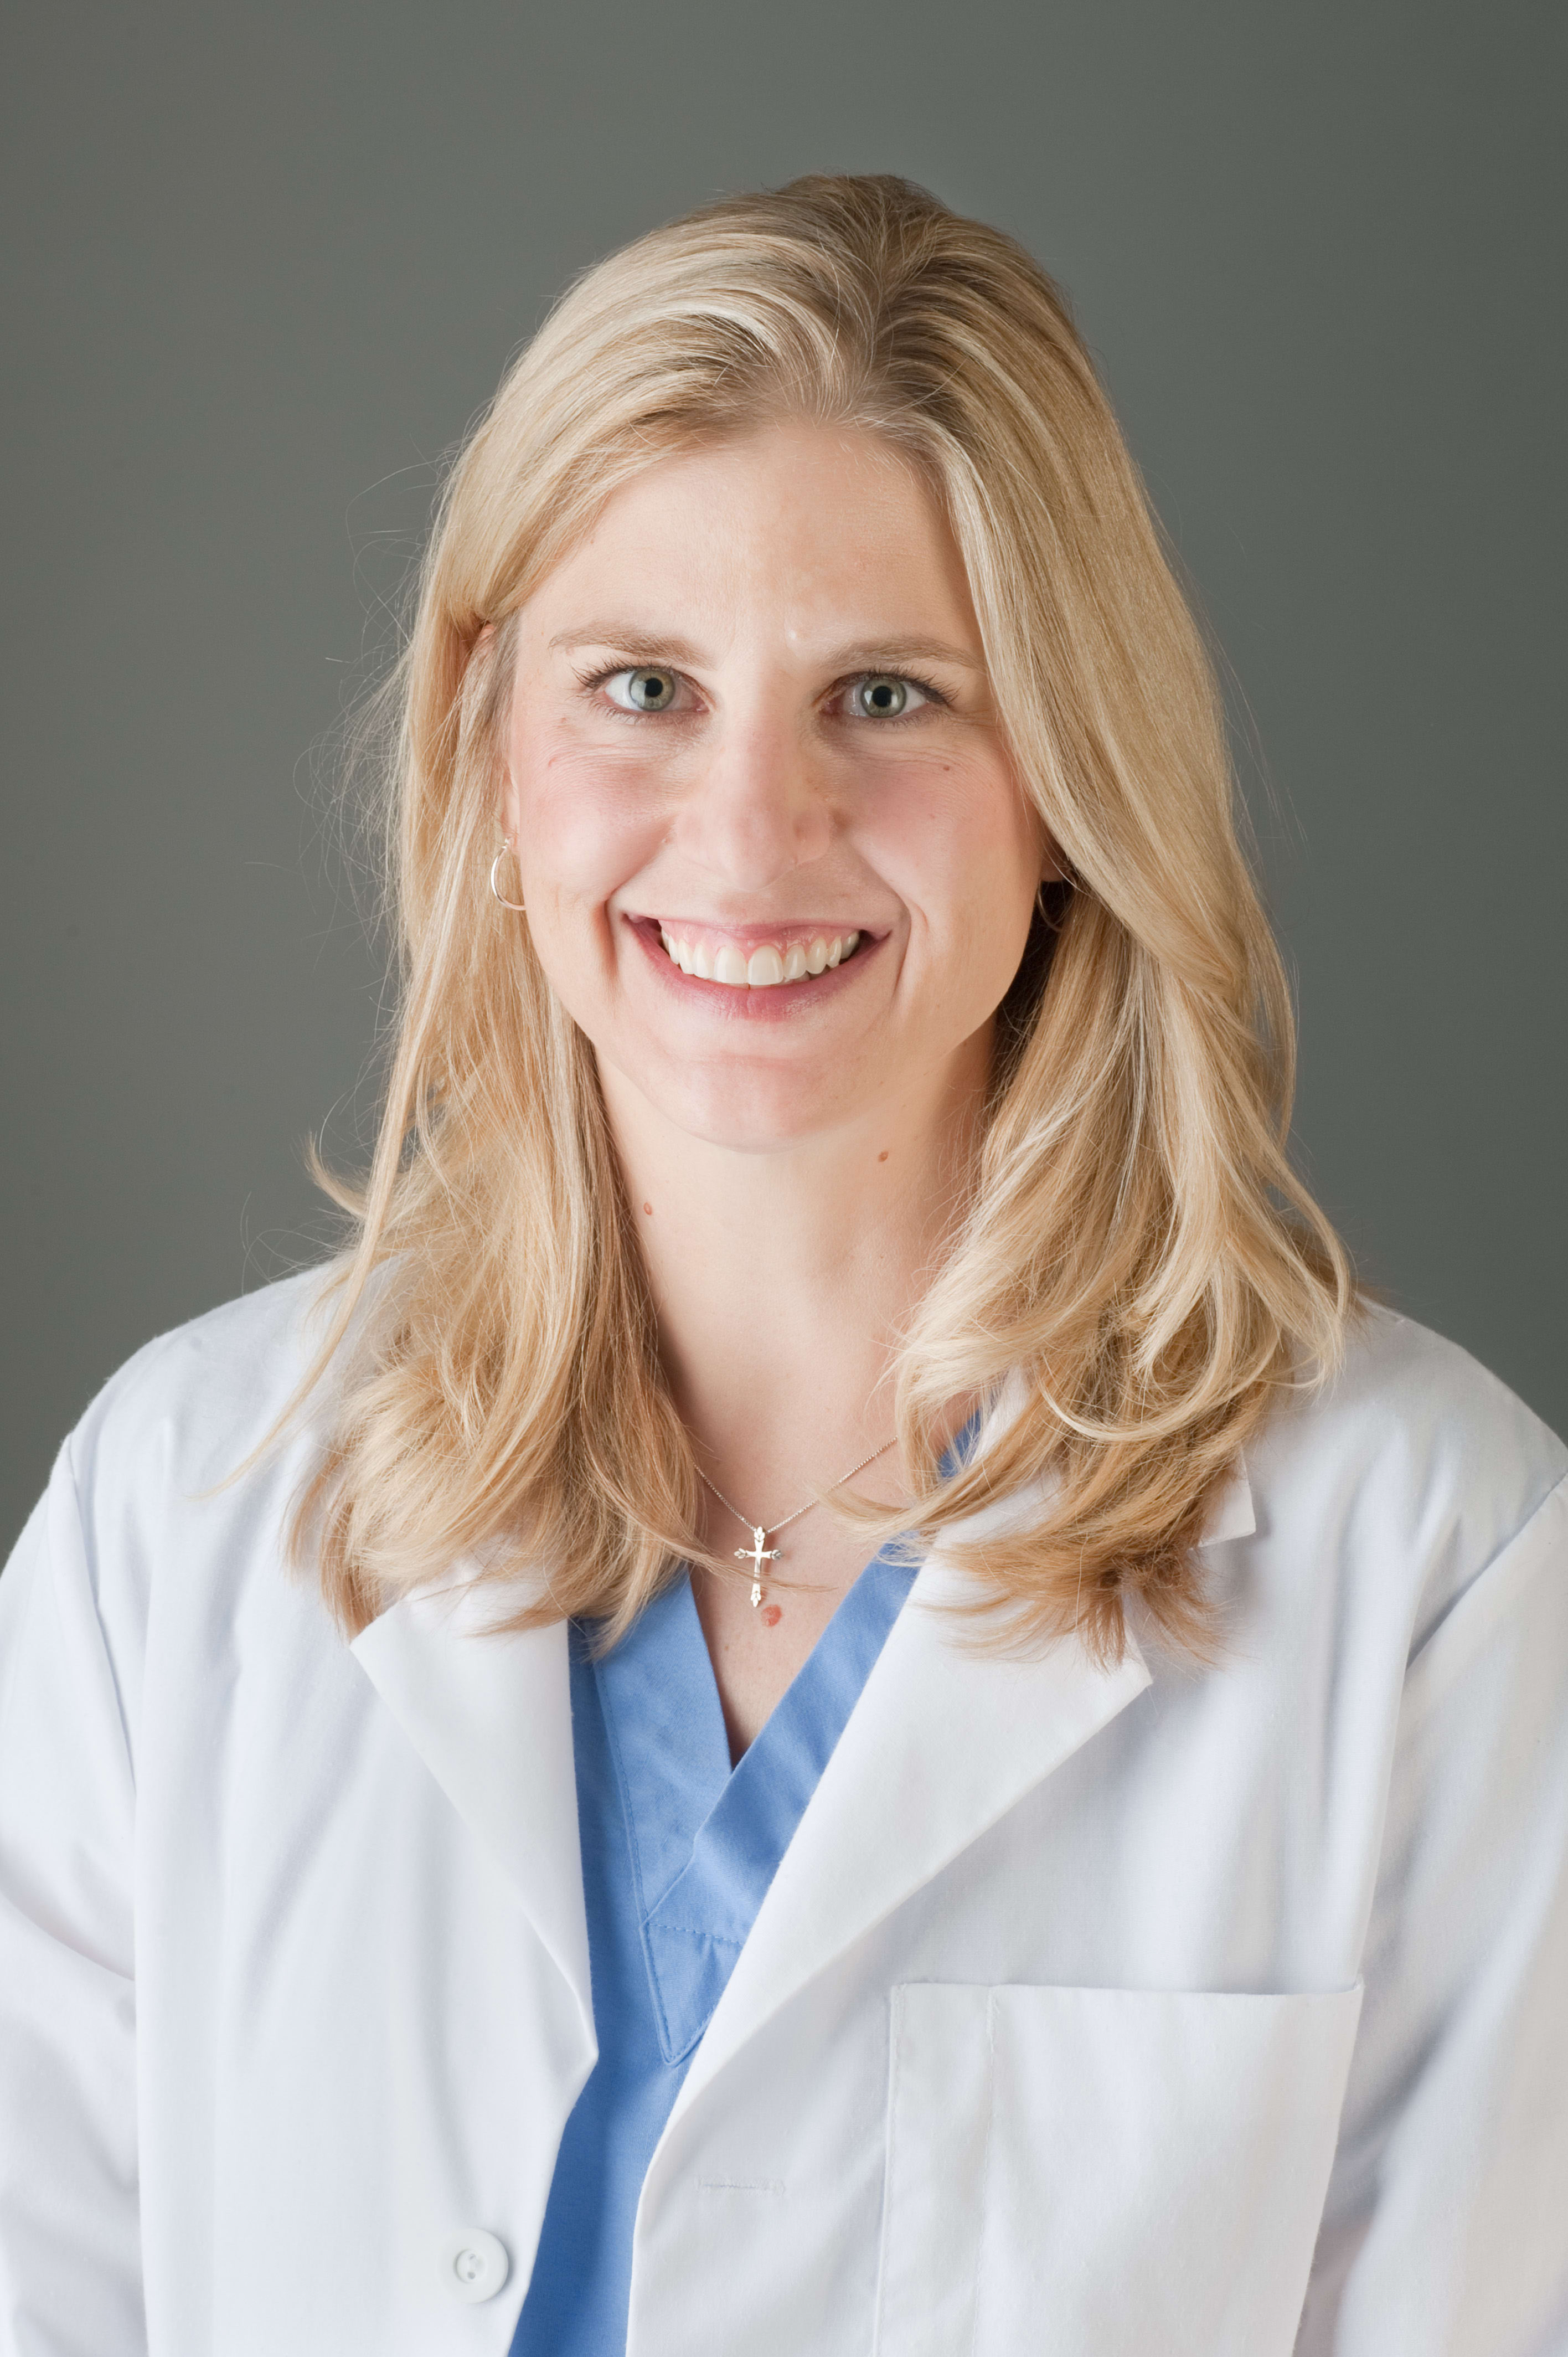 Dr. Kristin Francis Lower, MD